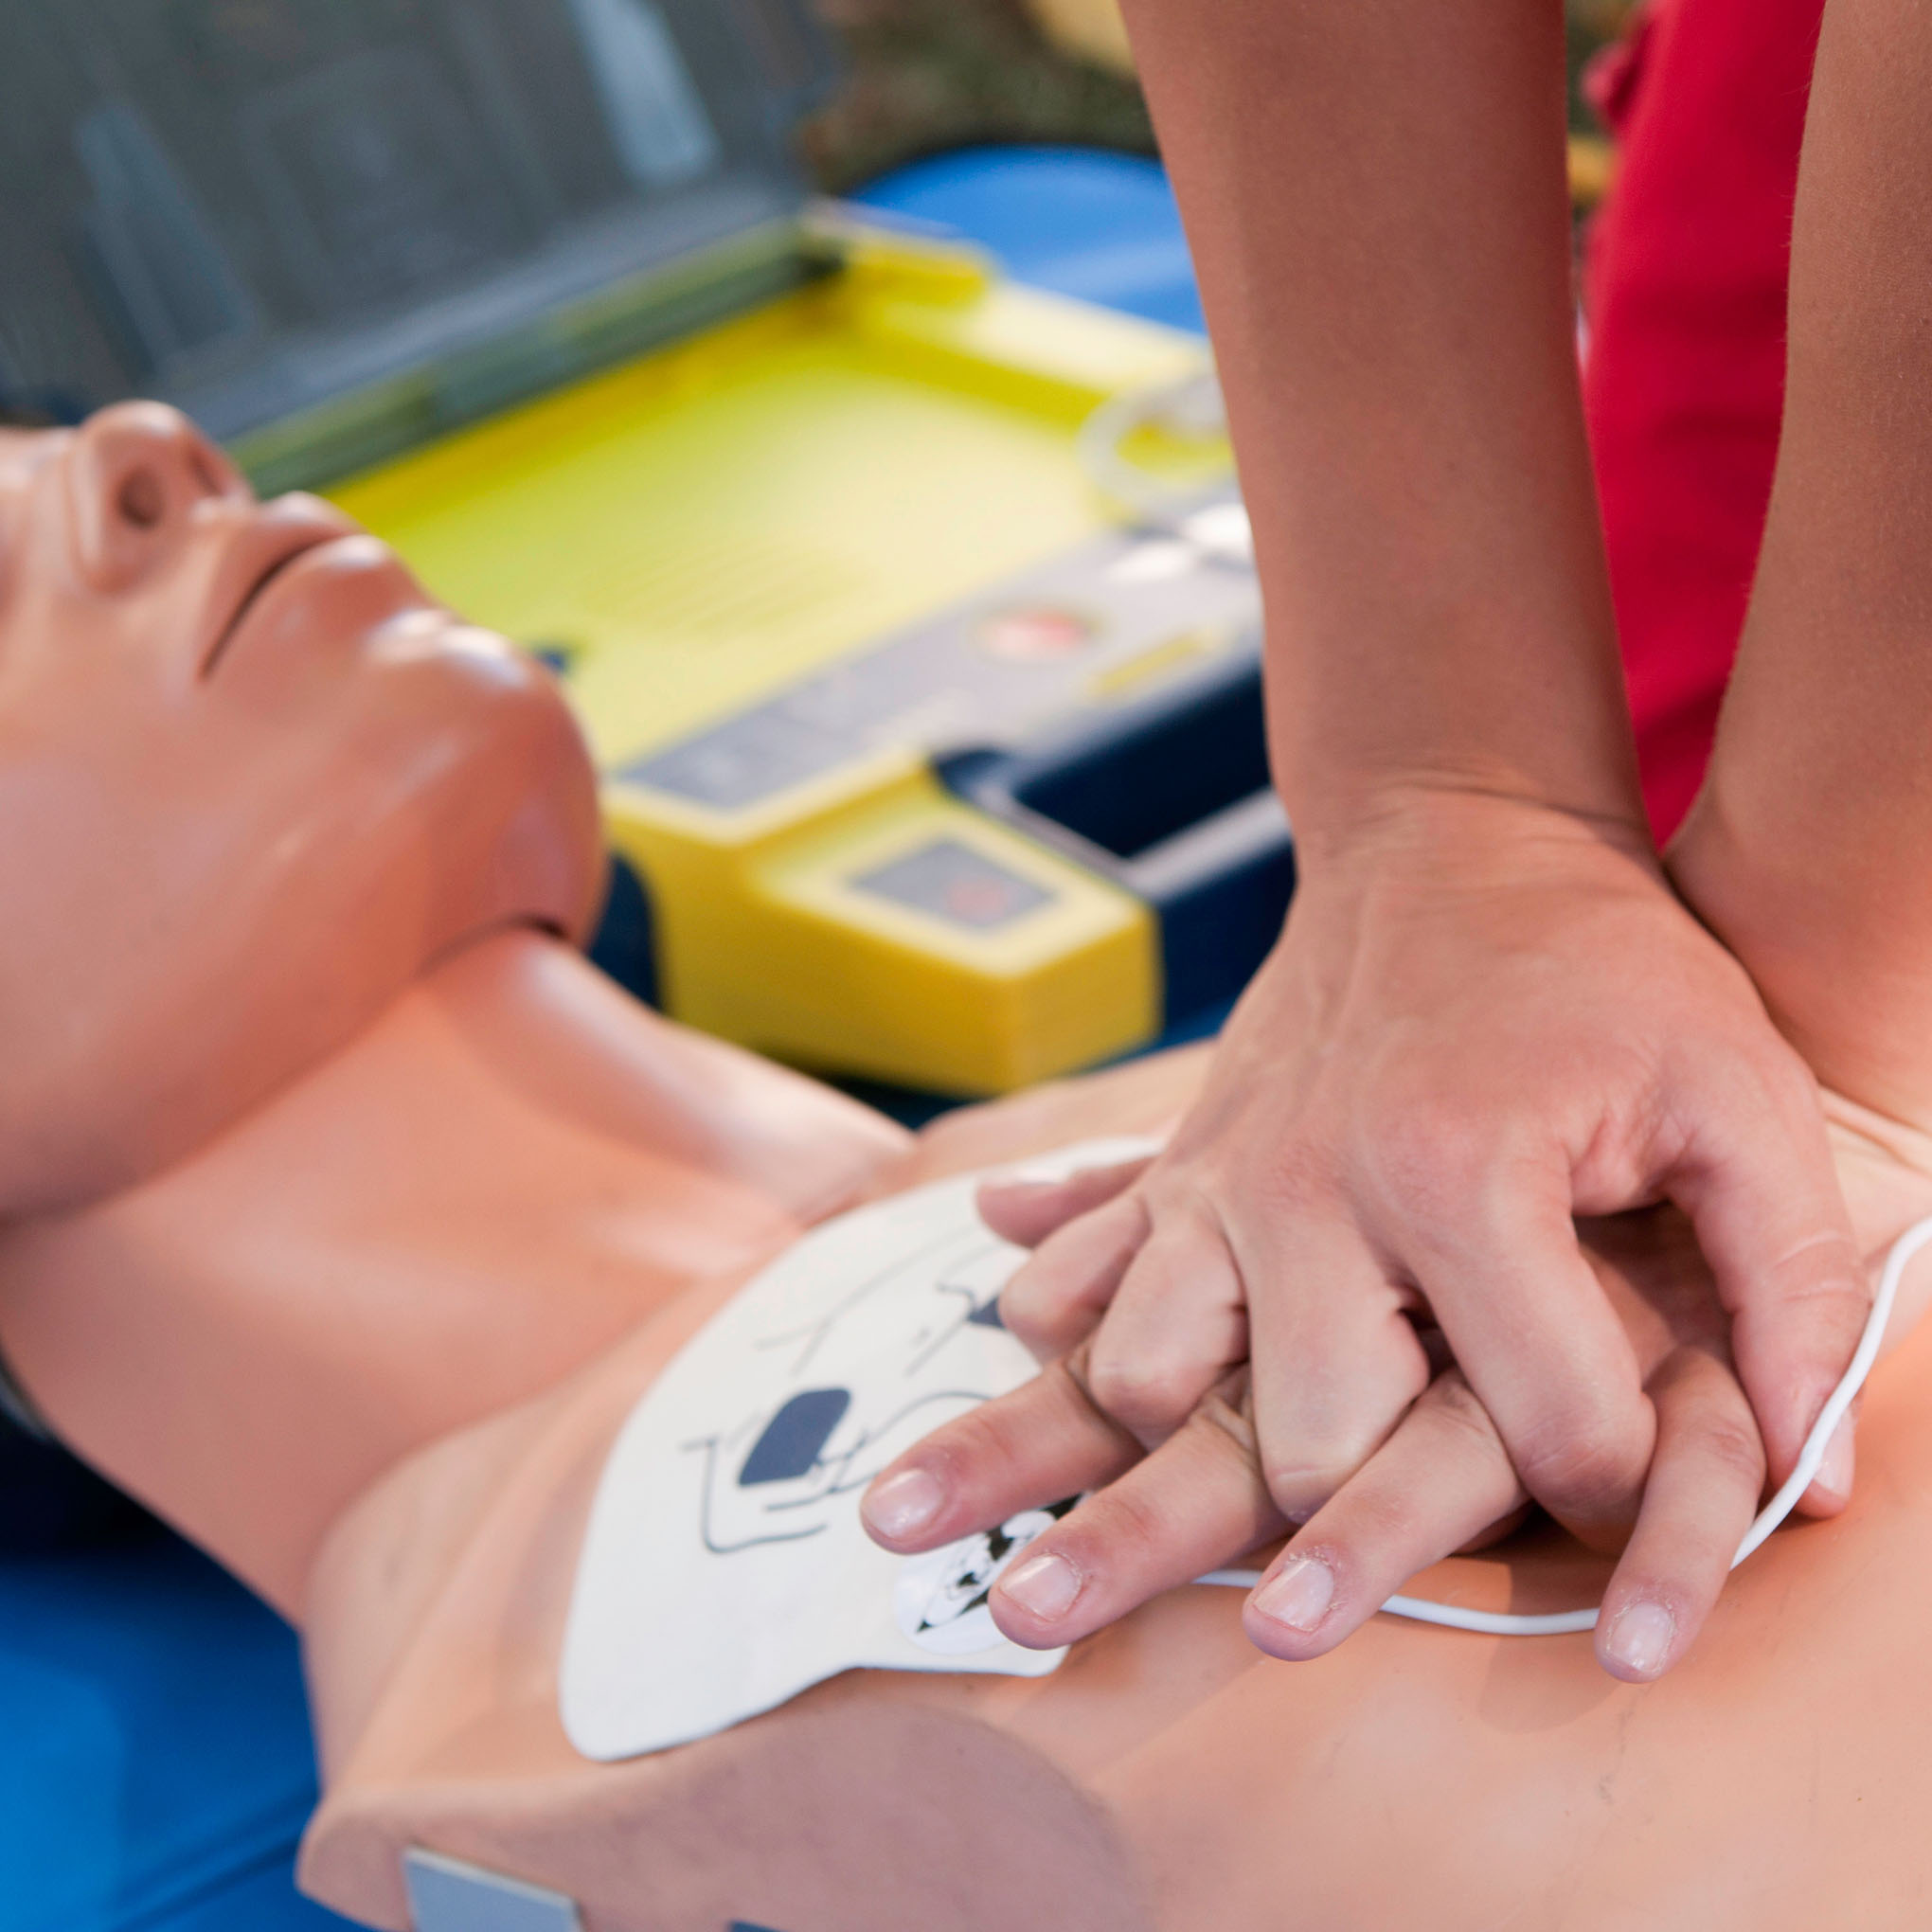 Defibrillator CPR practice